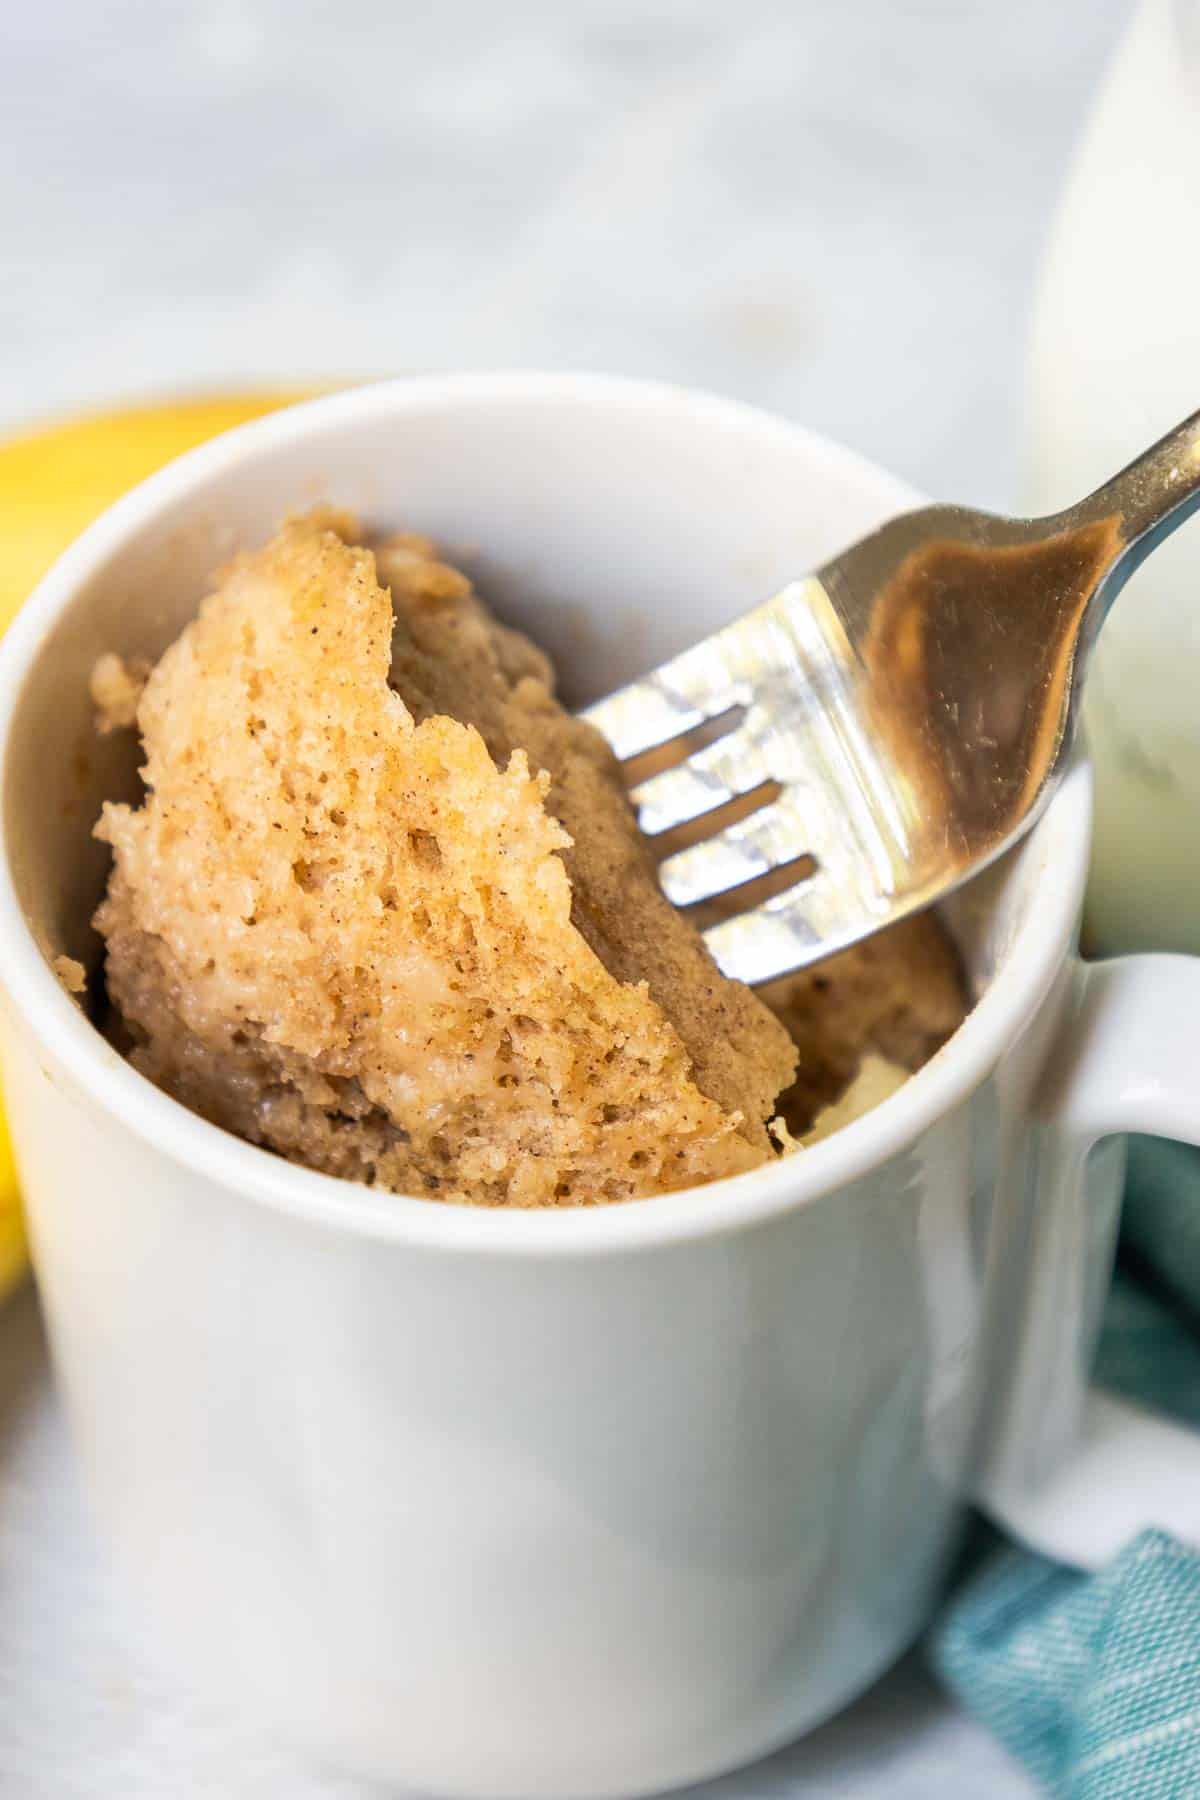 A bite of banana mug cake on a fork to show the banana bread-like texture.